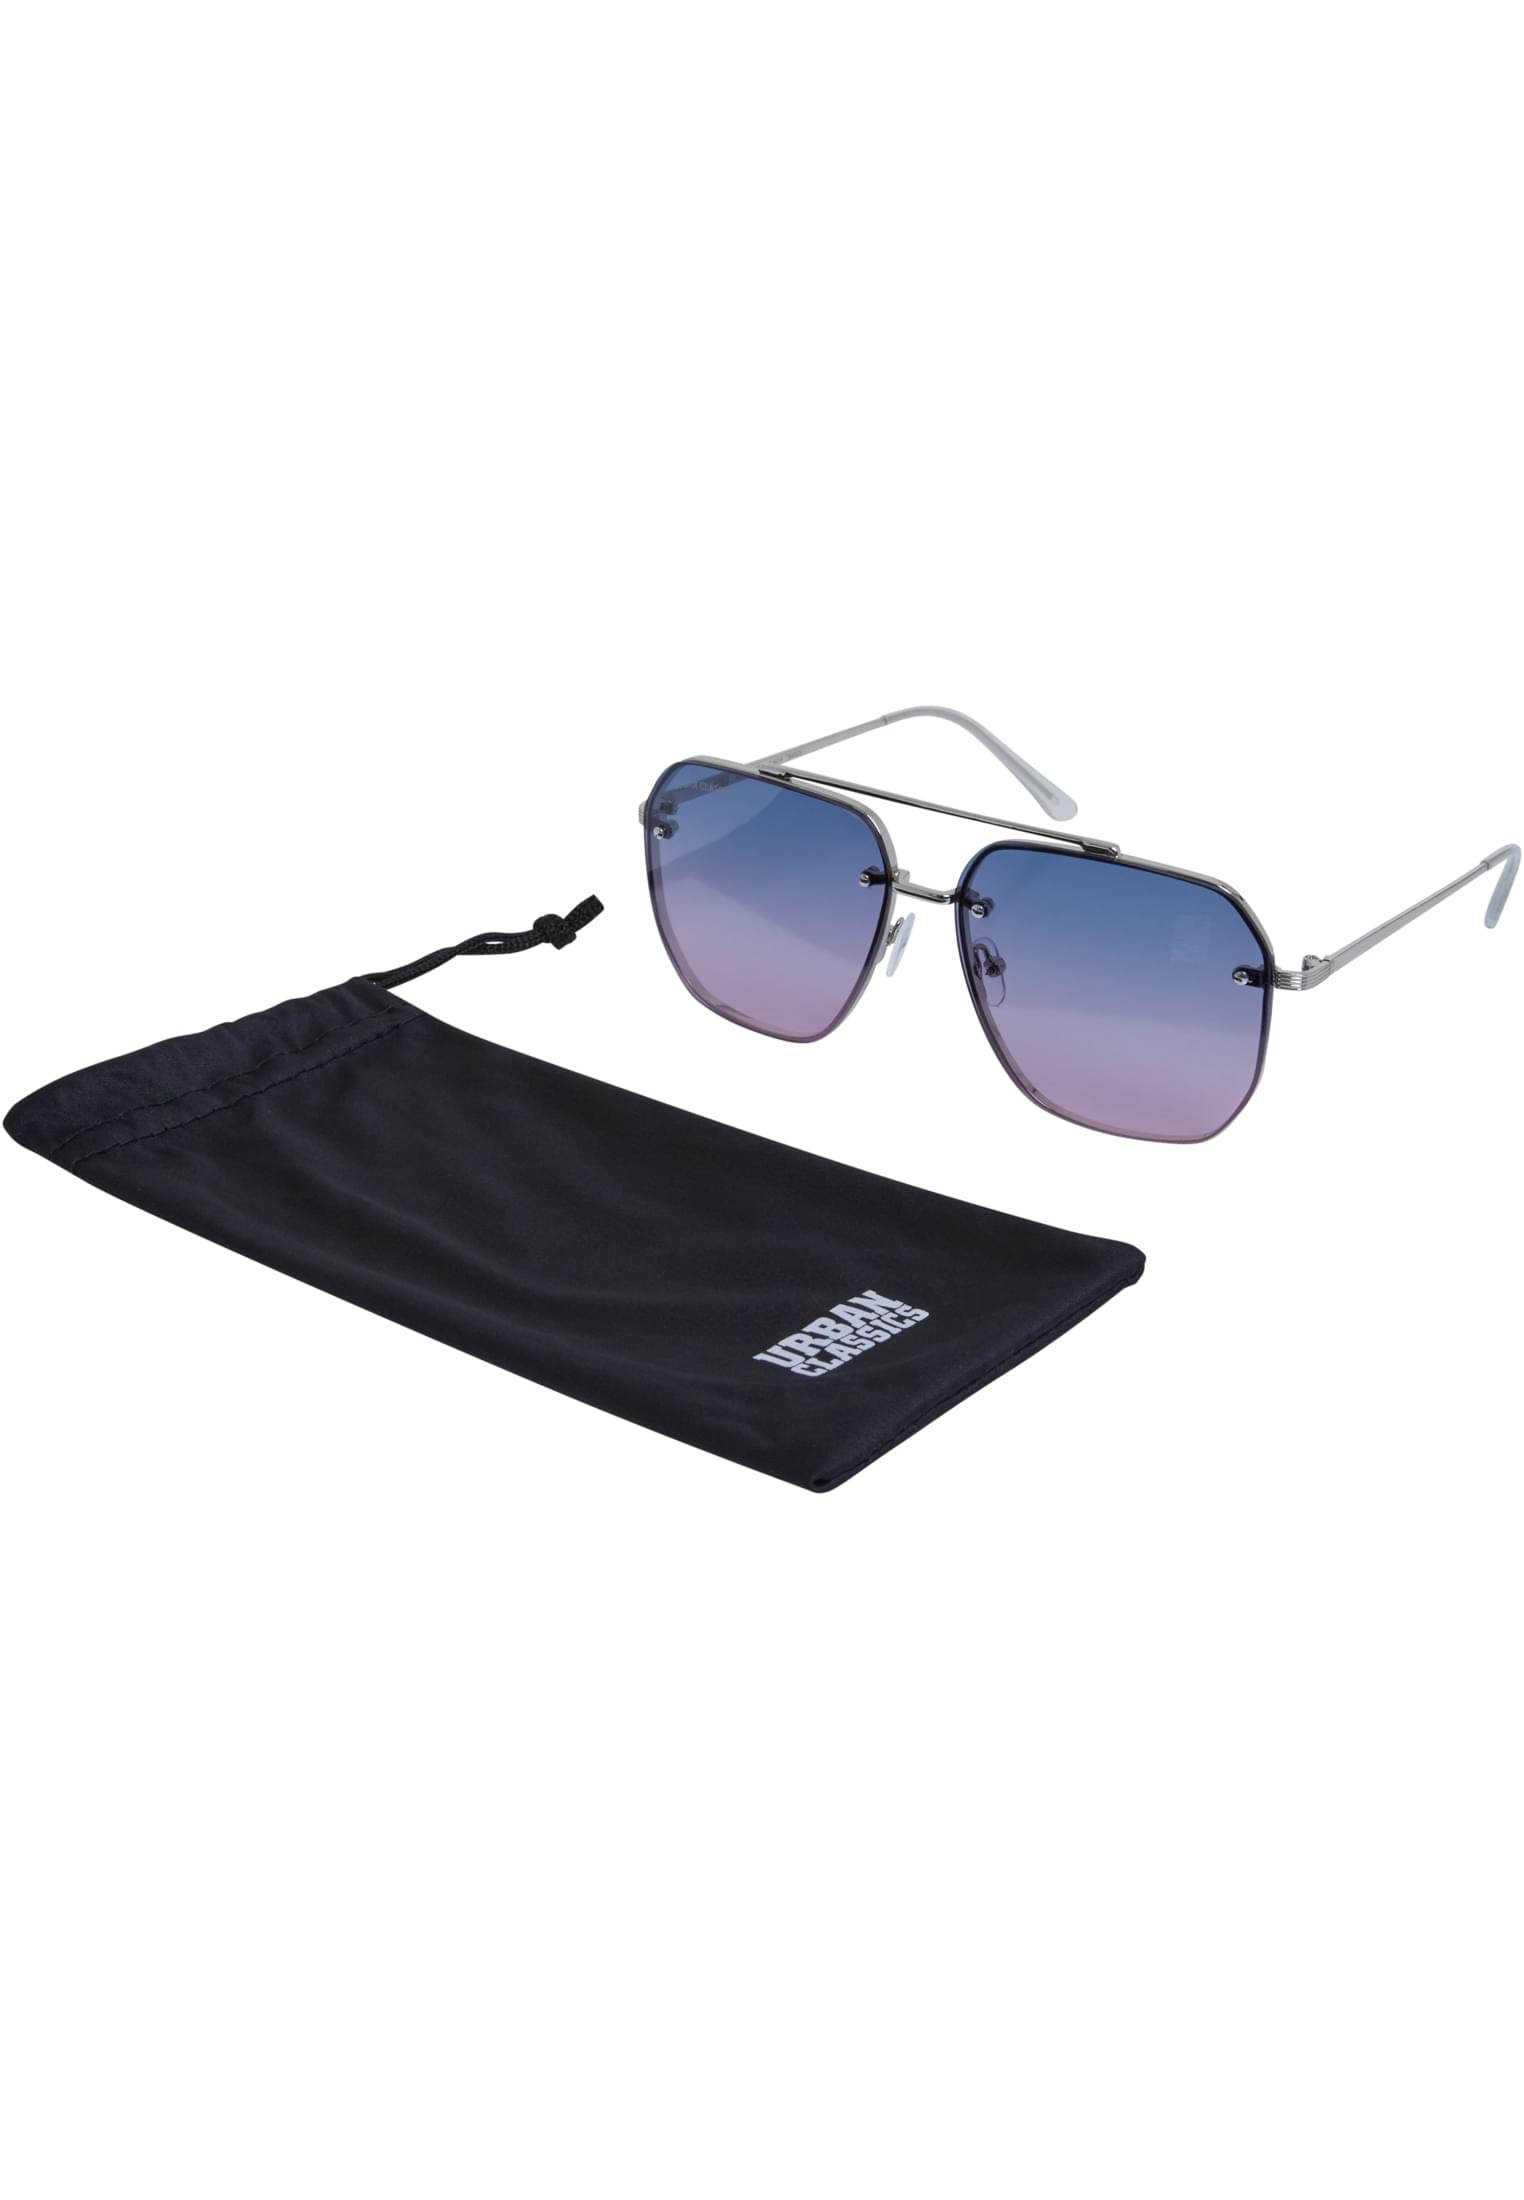 Sunglasses Timor black/silver